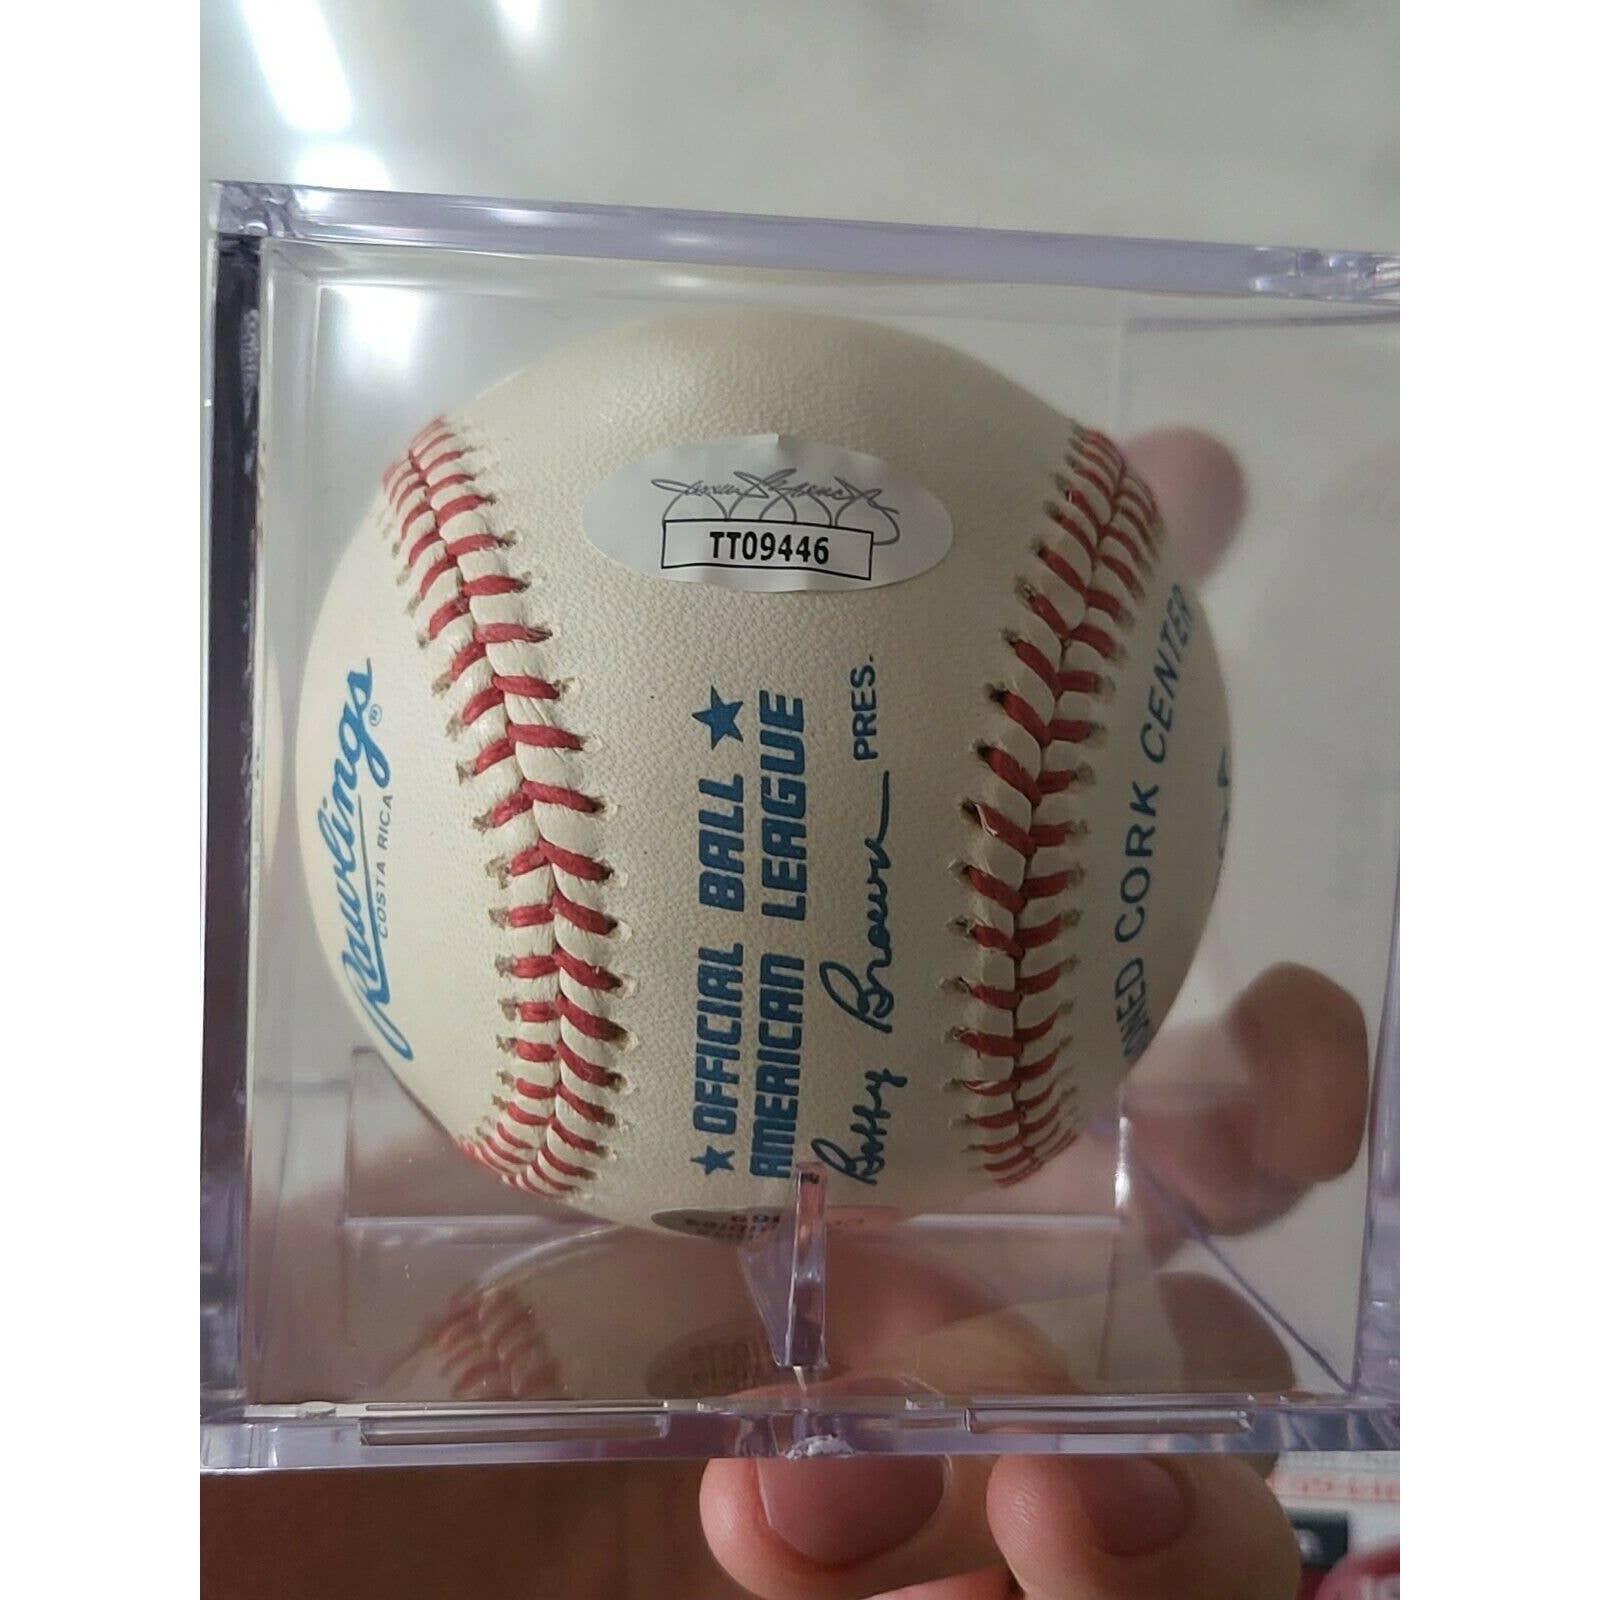 Johnny Mize and Ralph Kiner Autographed/Signed Baseball JSA - TreasuresEvolved